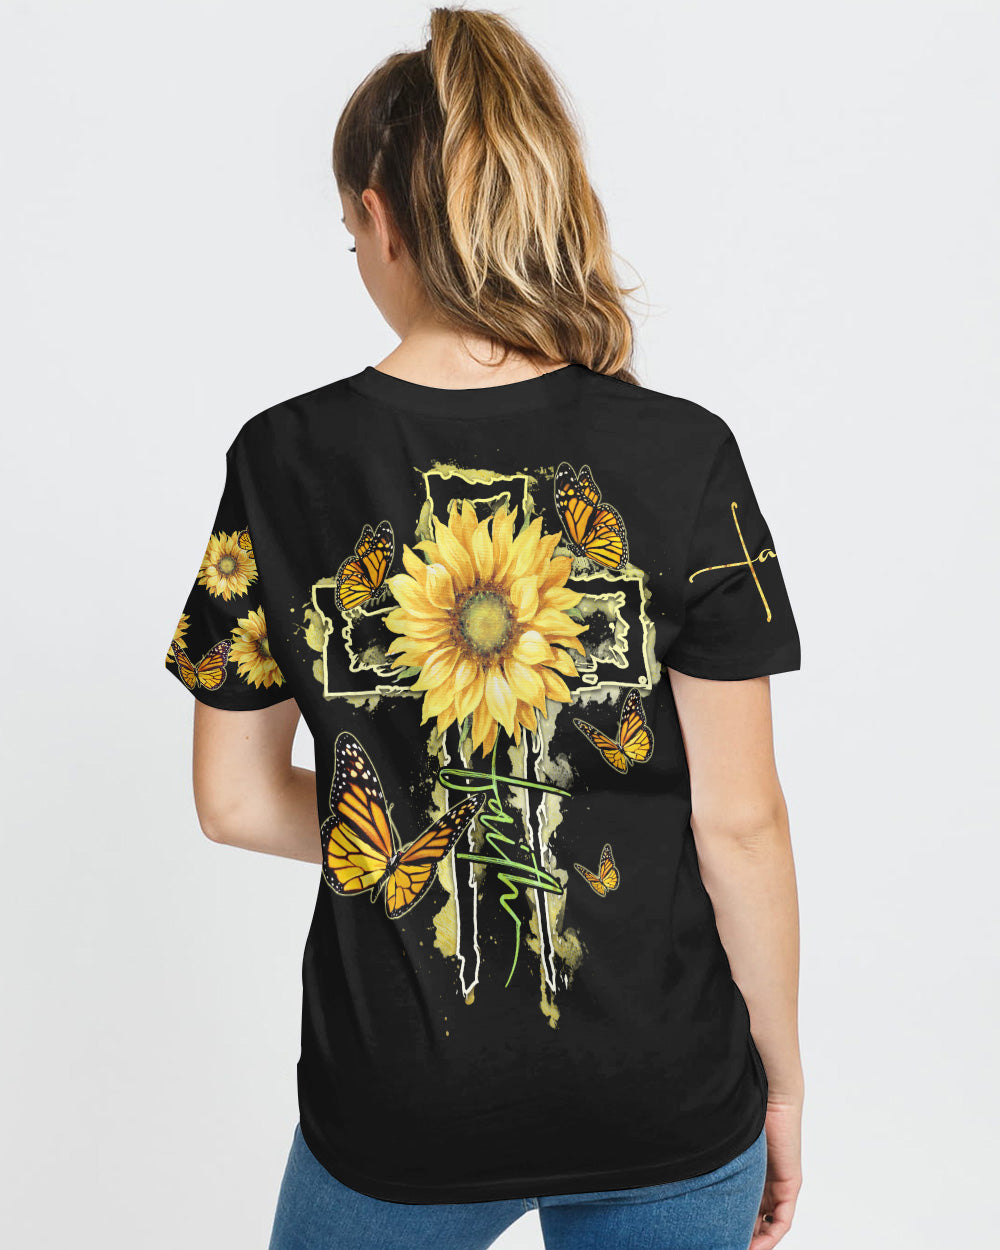 Sunflower Faith Cross Painting Women's Christian Tshirt